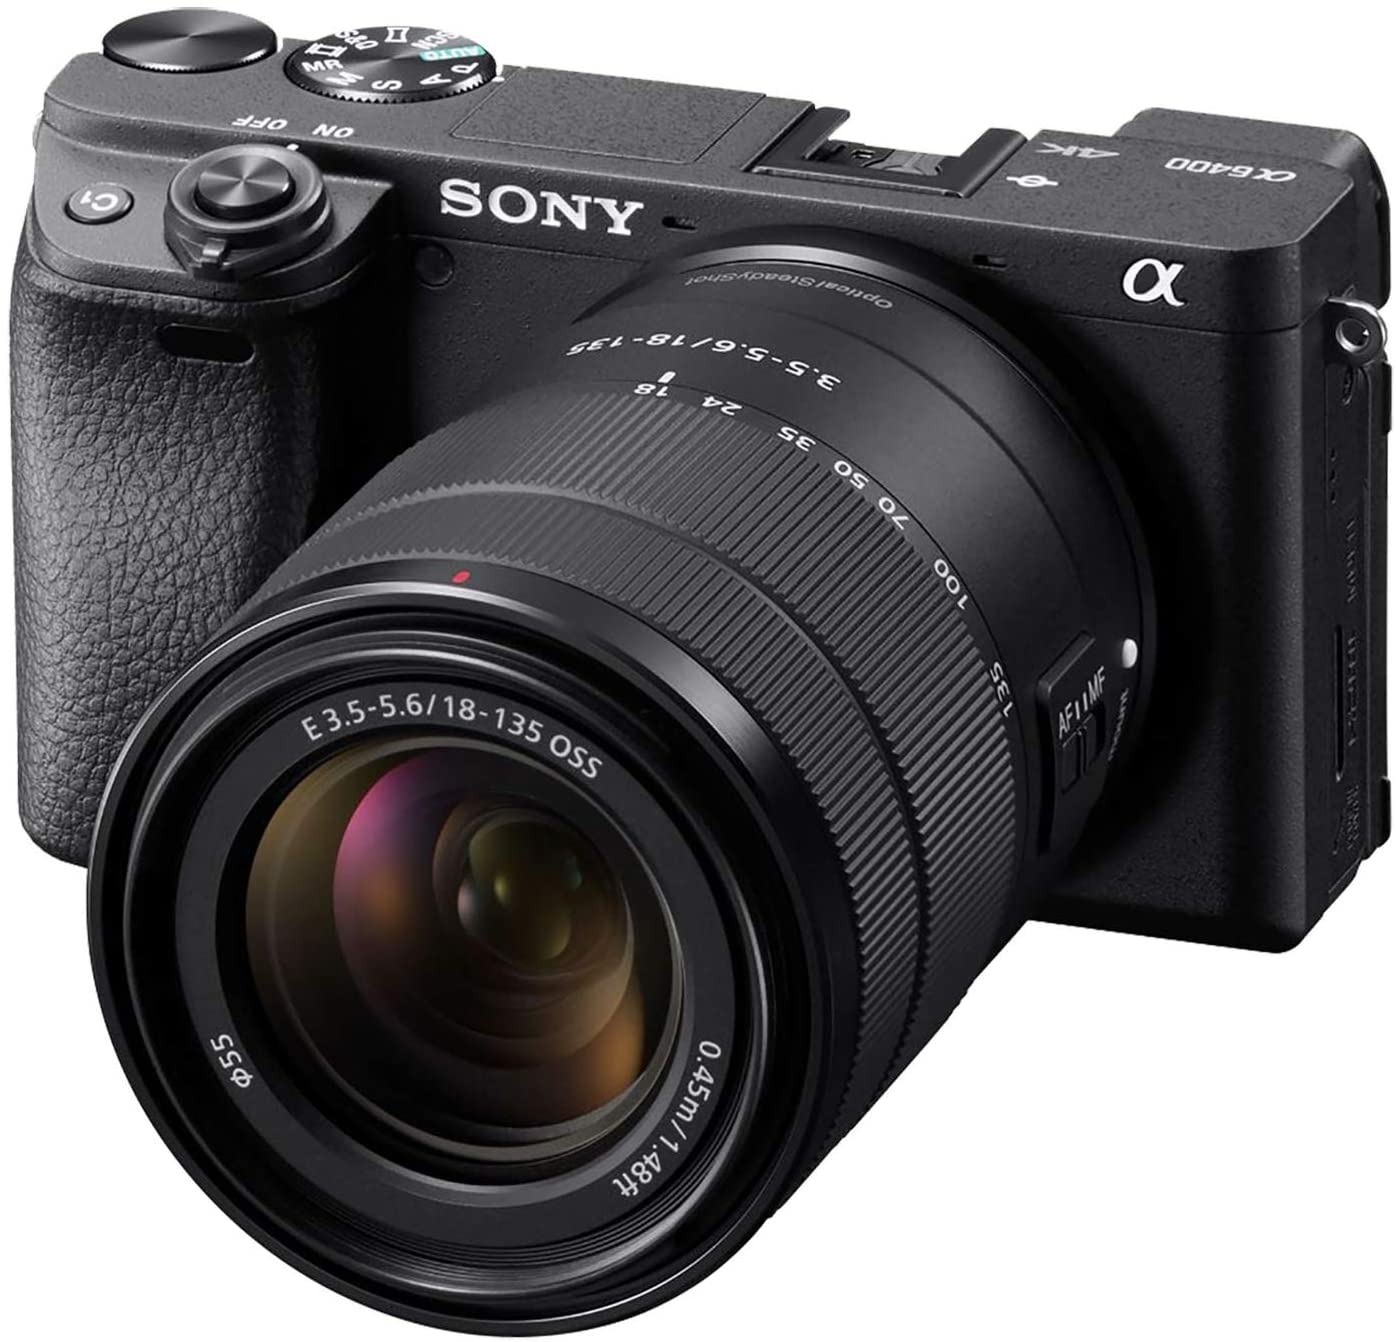 Sony a6400 With E 18-135mm f/3.5-5.6 OSS Lens